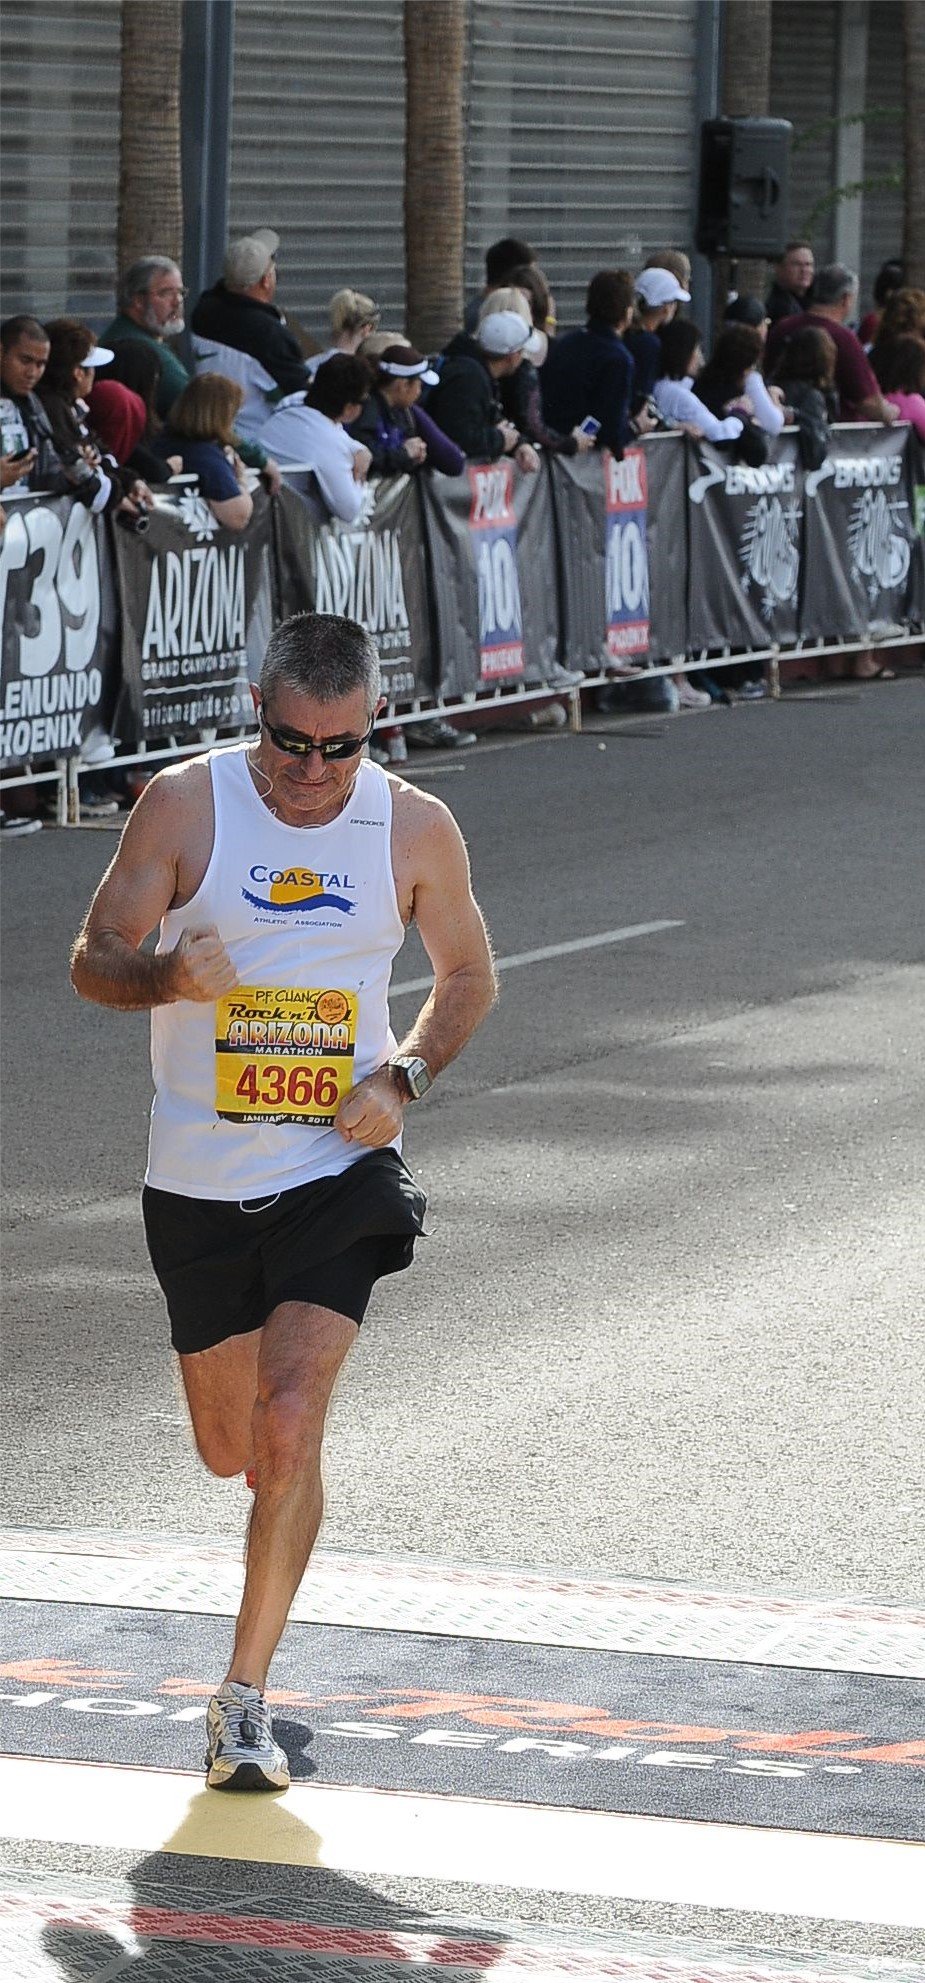 Dave Dulong runs qualifying time for Boston marathon